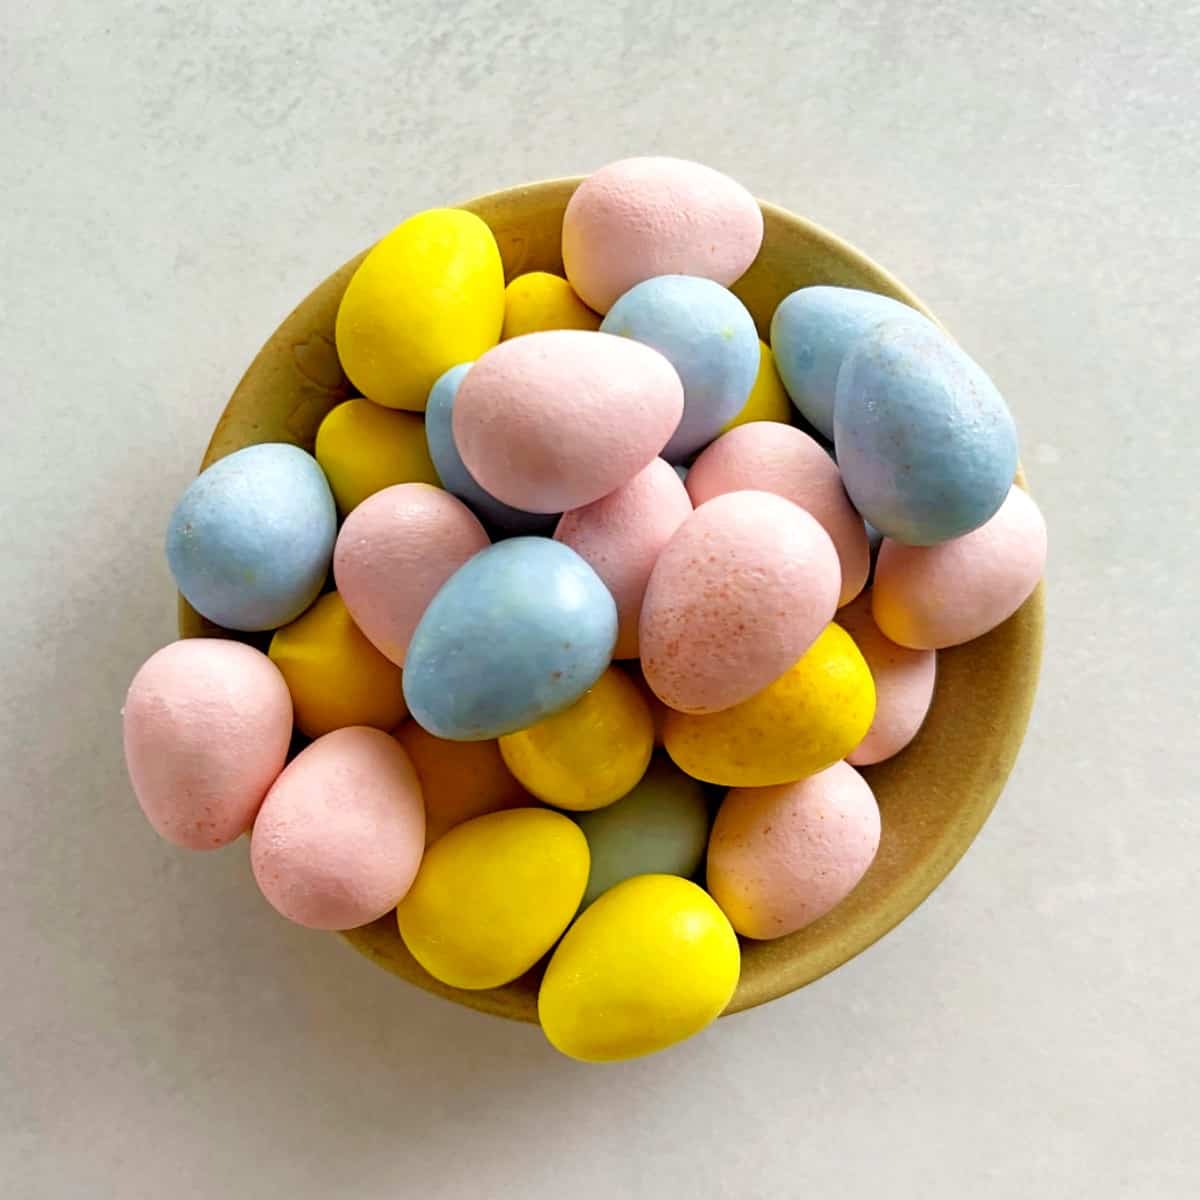 cadbury mini eggs in a bowl